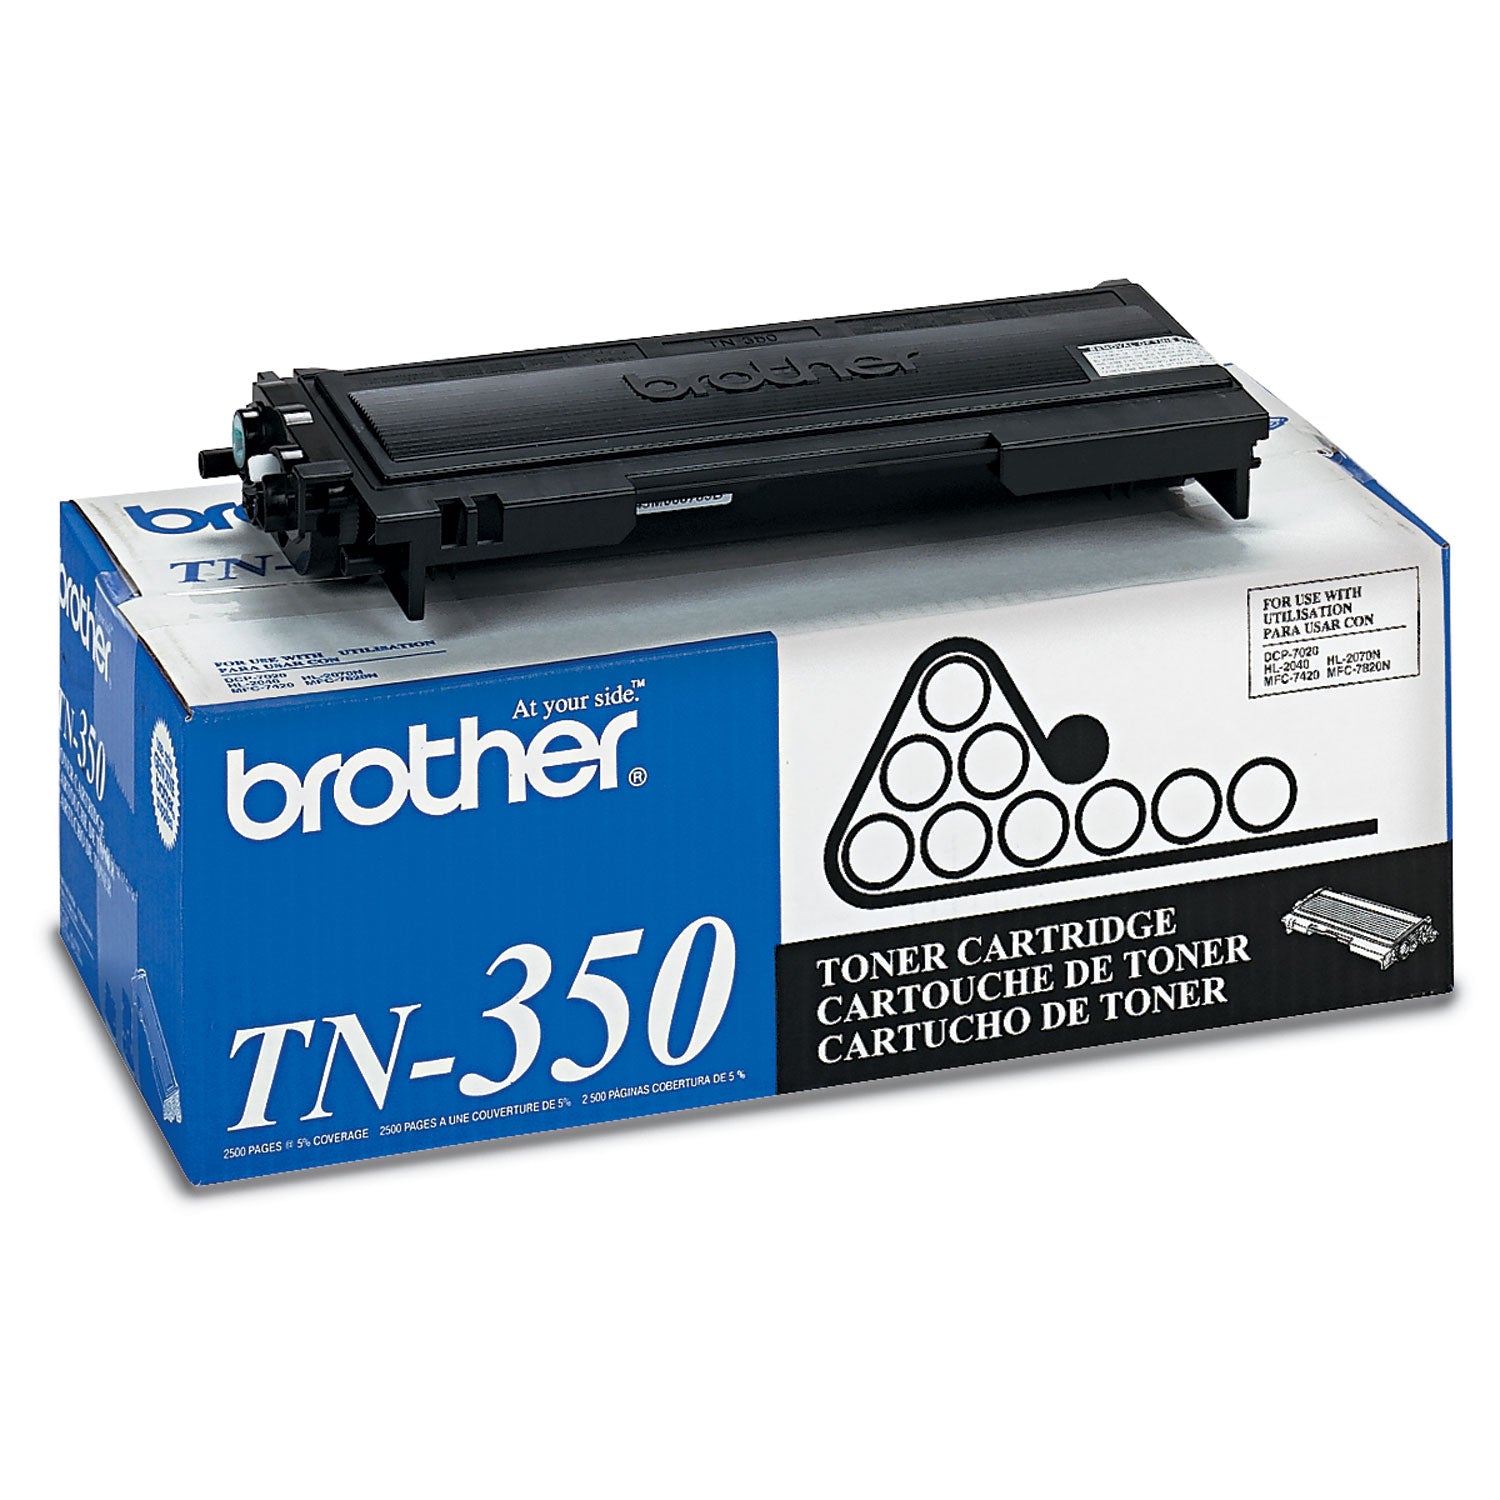 tn350-toner-2500-page-yield-black_brttn350 - 1